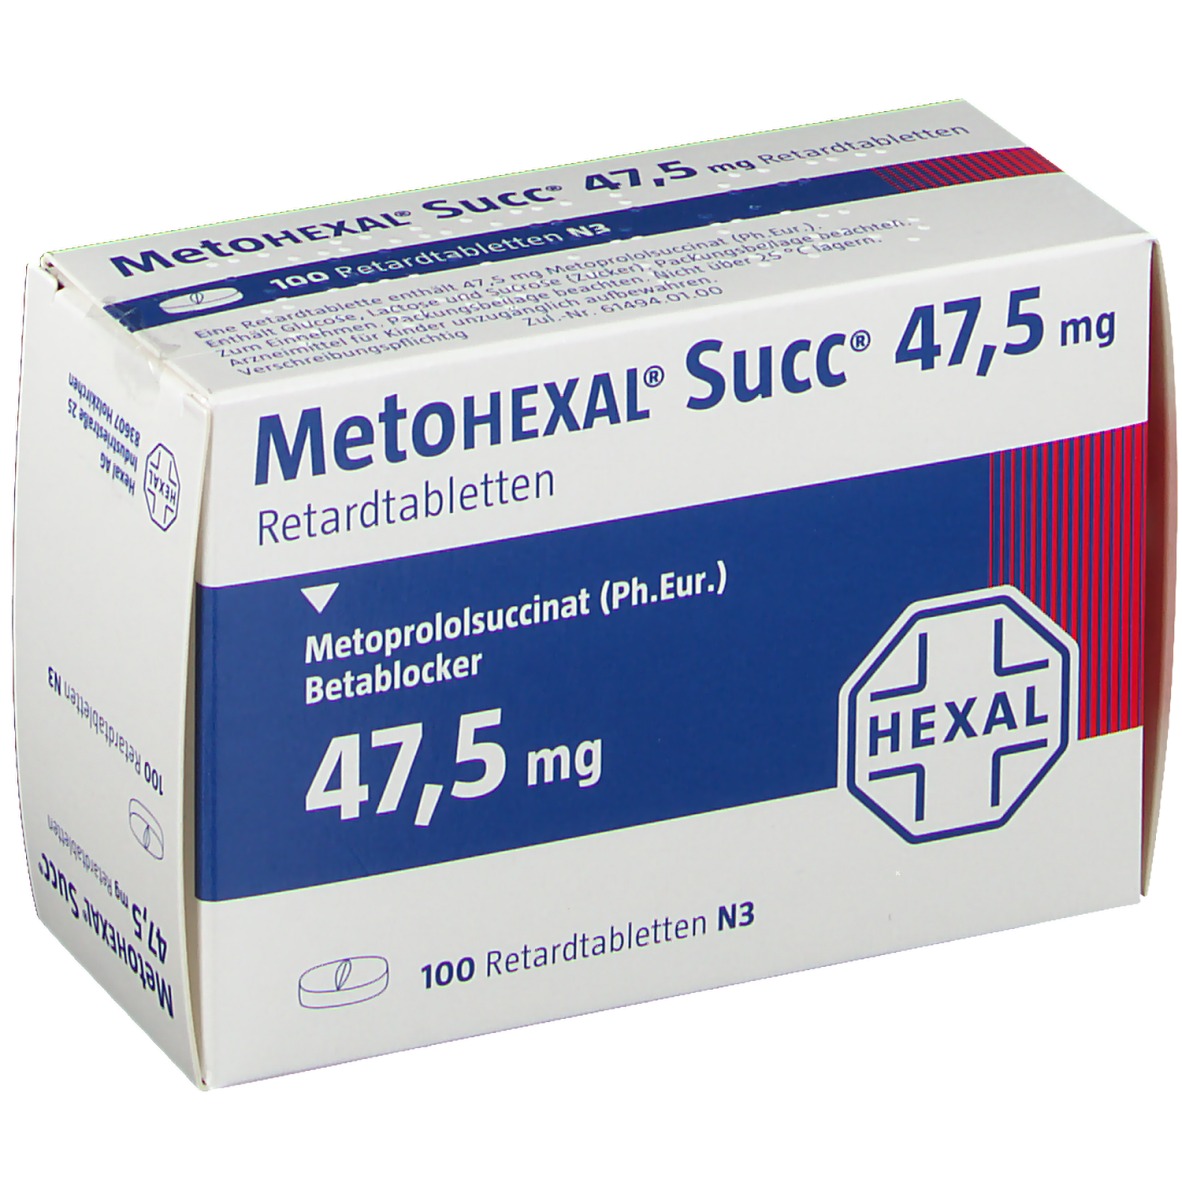 Hipertansiyon metoprolol için ilaç